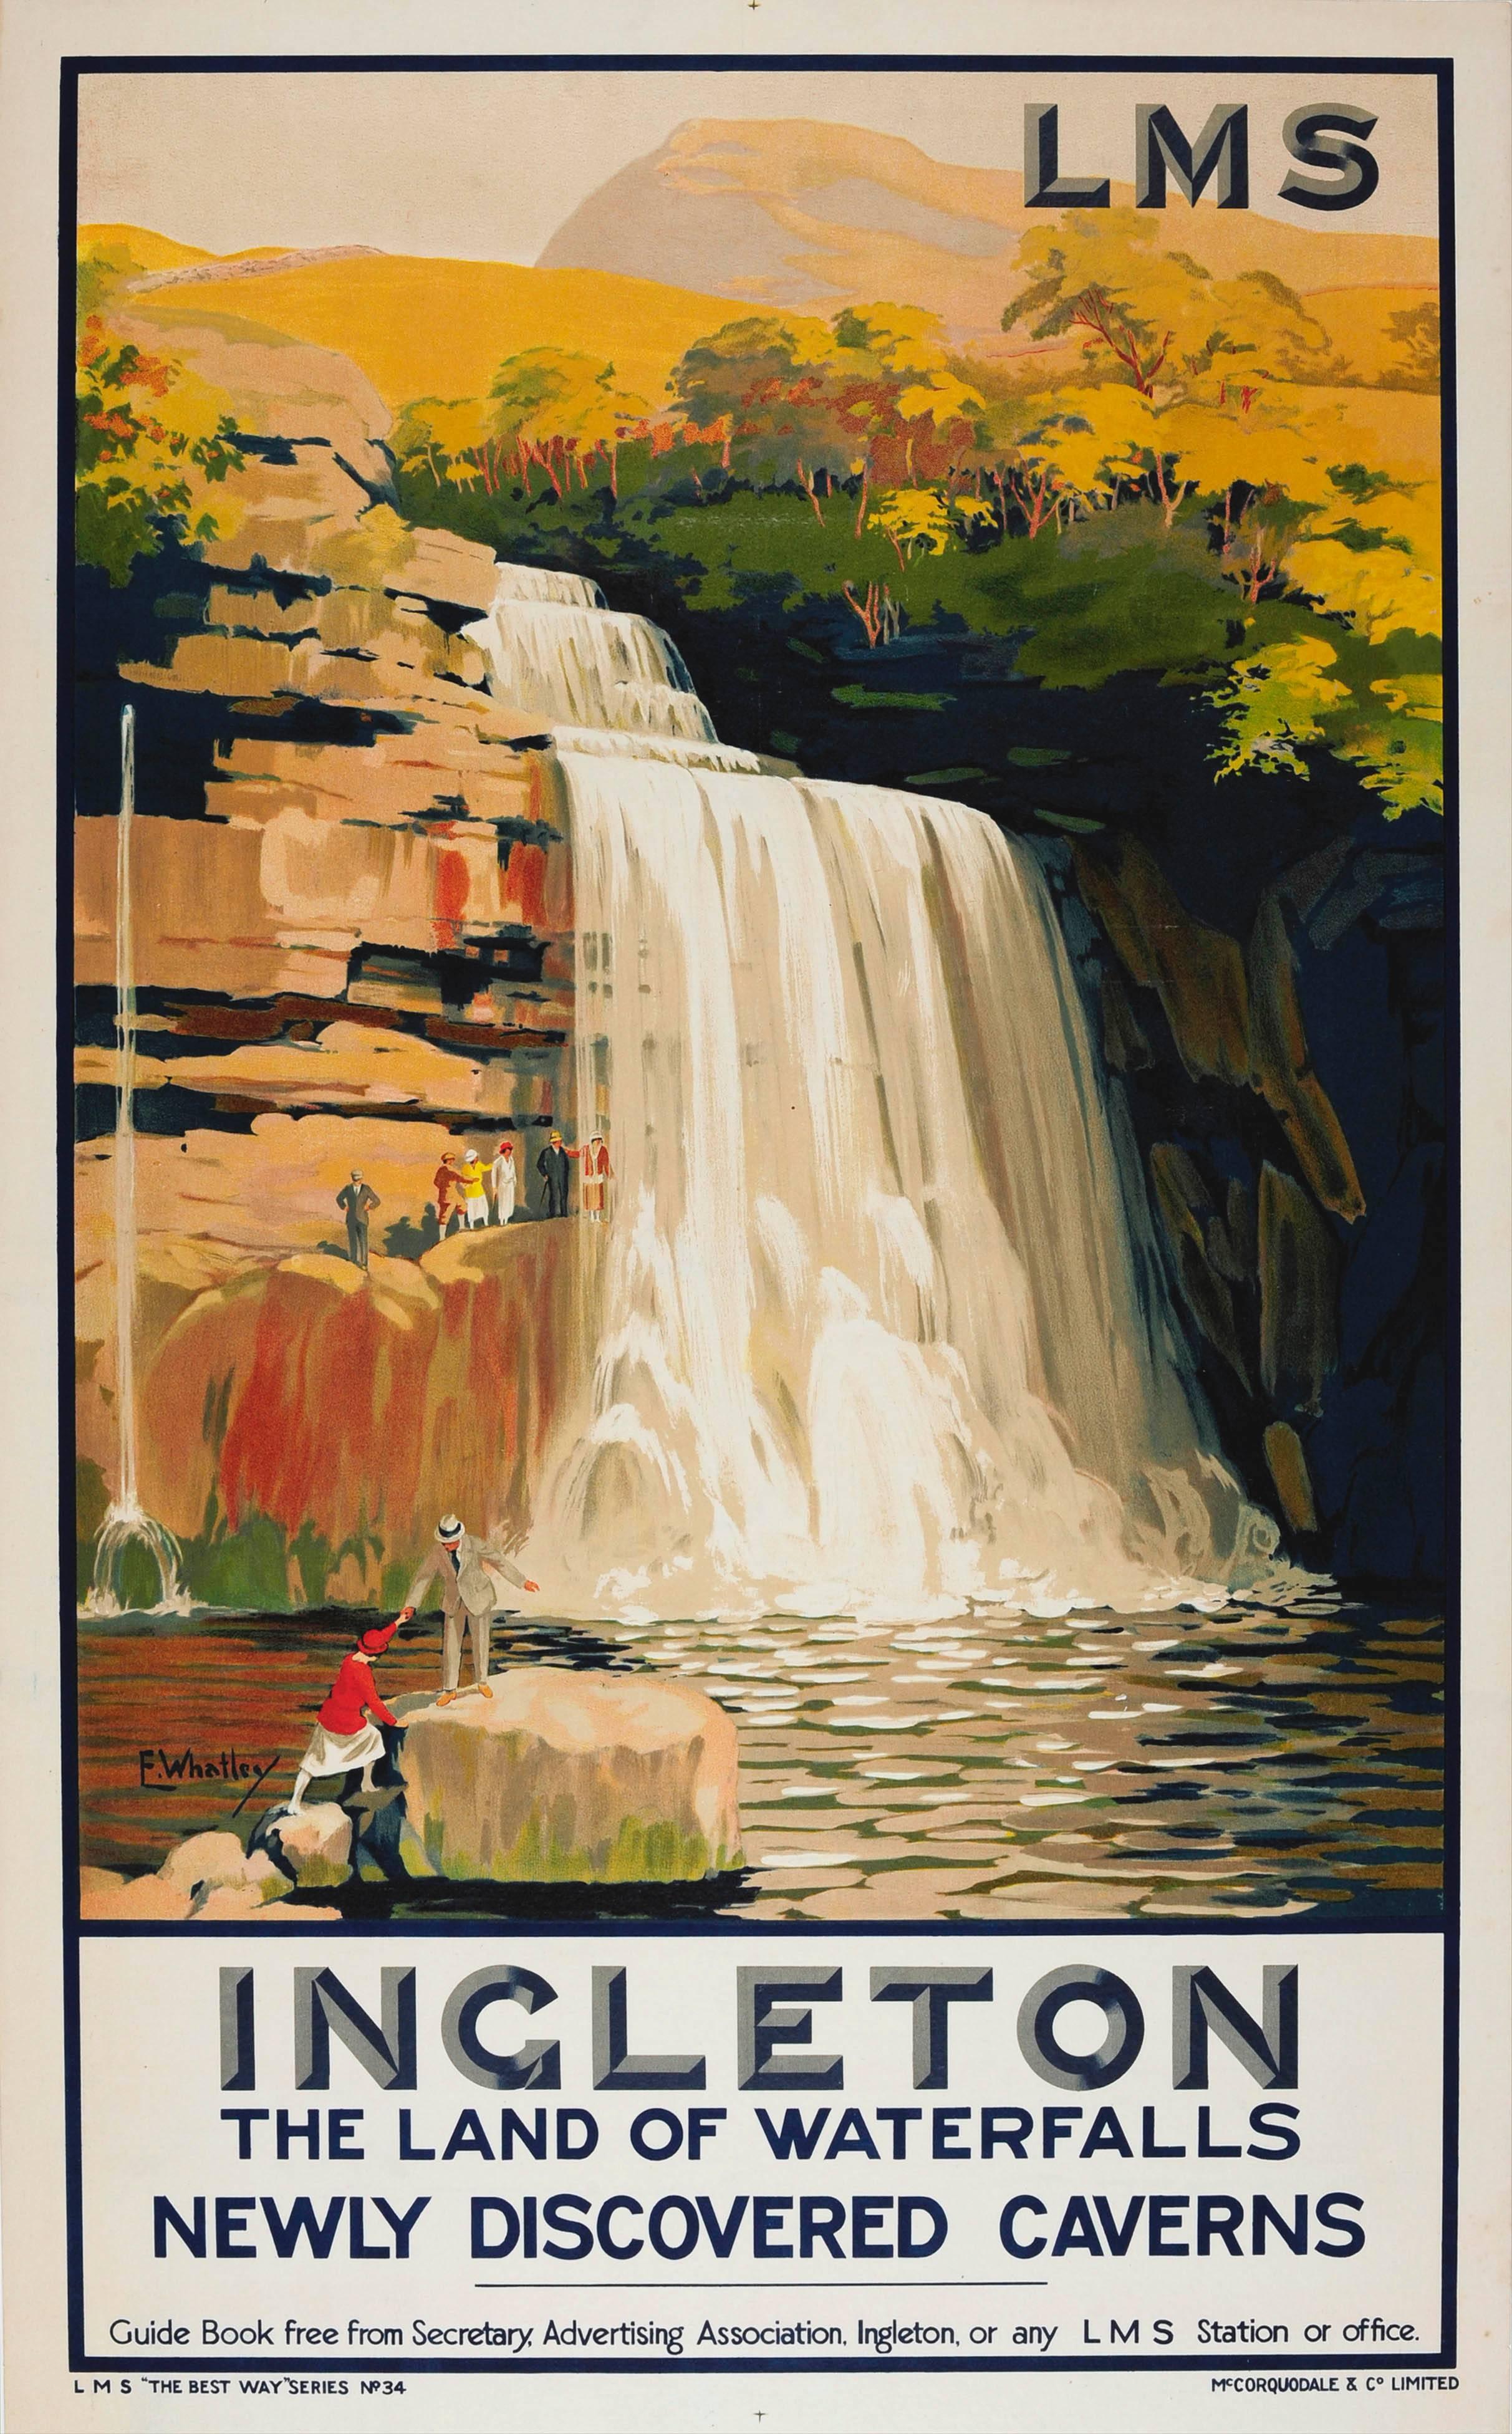 F. Whatley Print - Original 1930s London Midland & Scottish Railway LMS Poster: Ingleton Waterfalls